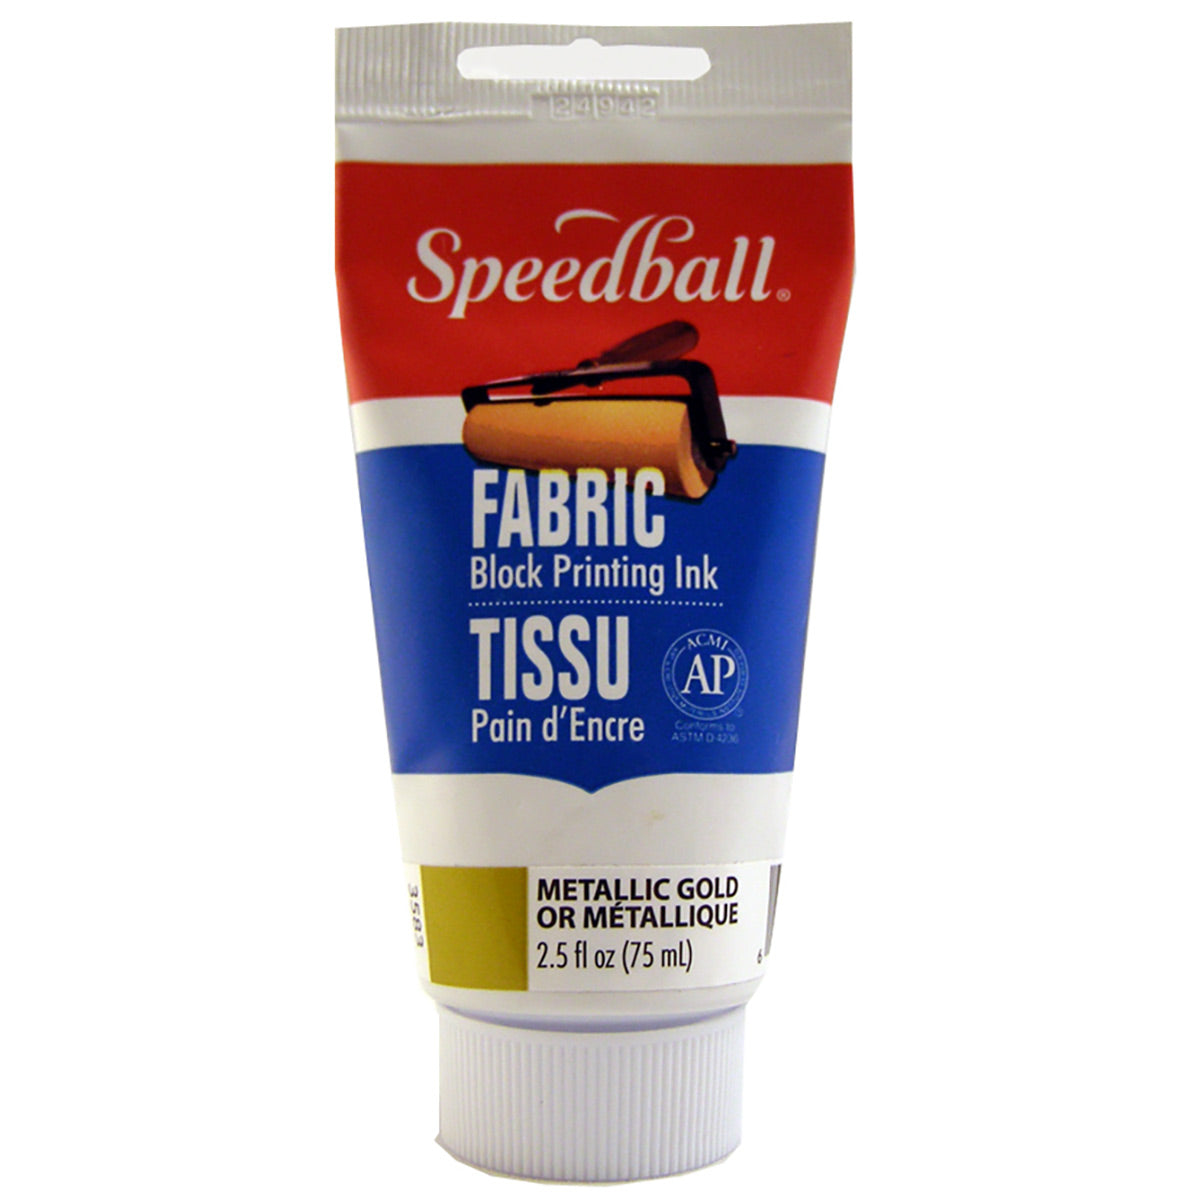 Speedball - Fabric Block Printing Ink 75ml (2.5oz) - Metallic Gold